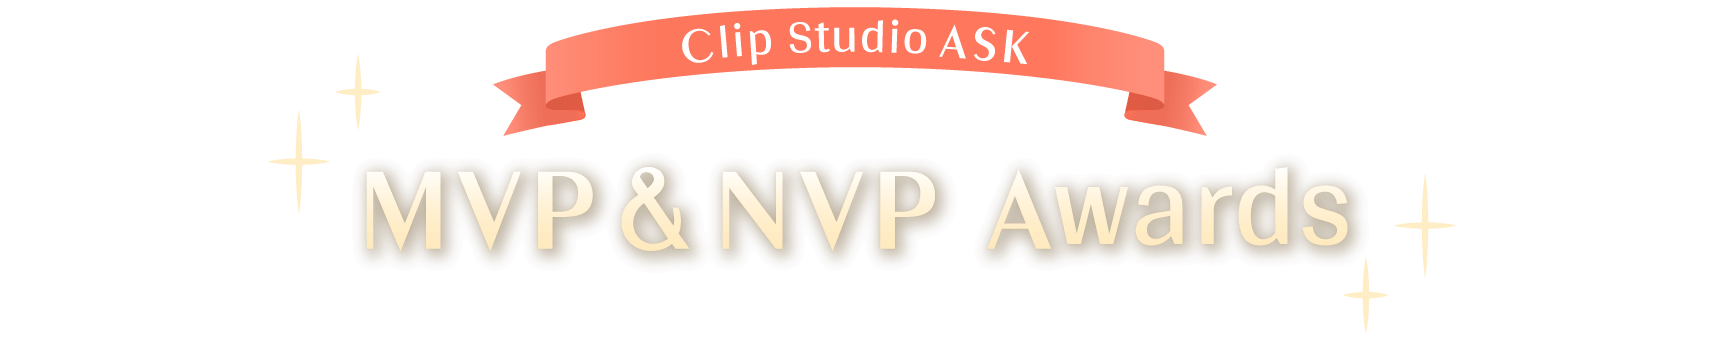 Clip Studio Ask Mvp And Nvp Awards